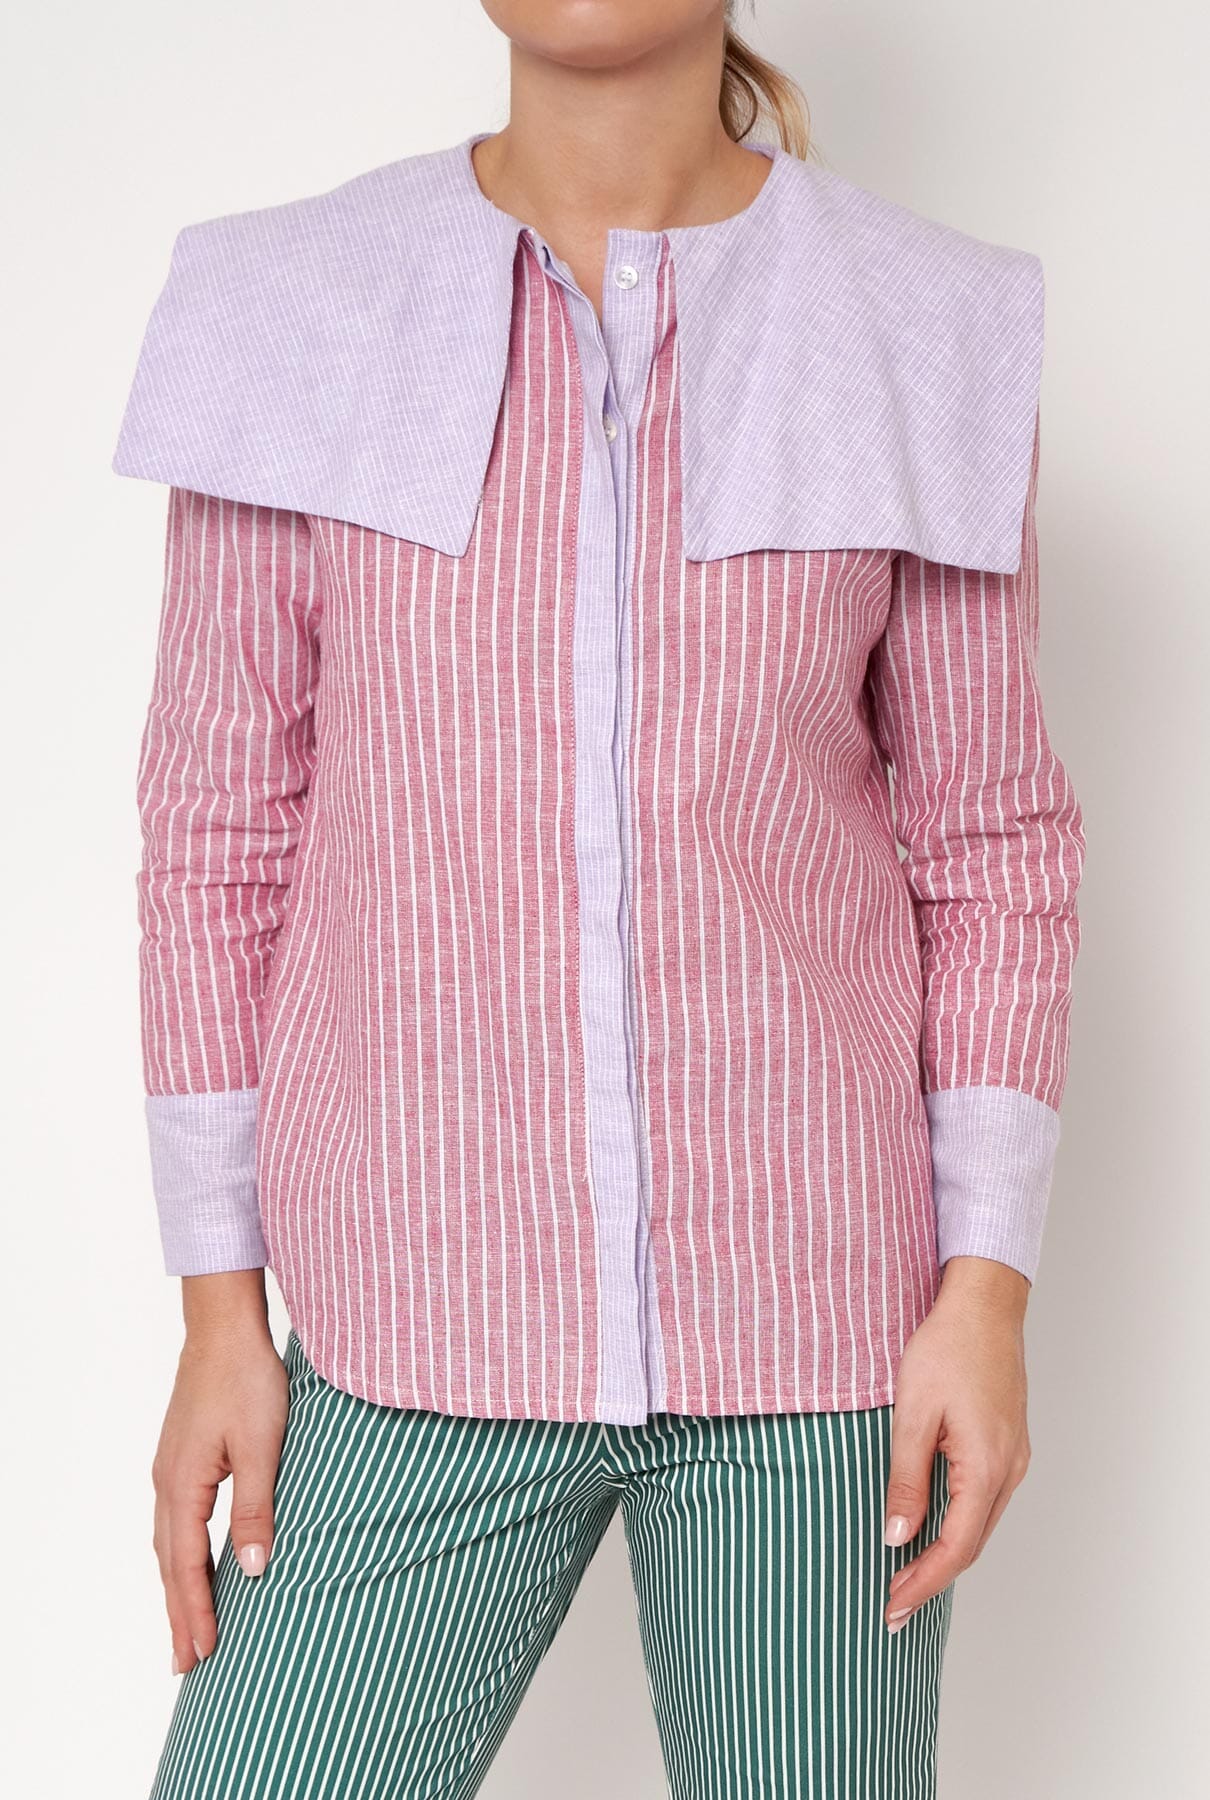 Camisa Loulou rosa/lila Shirts & blouses Vano Studio 